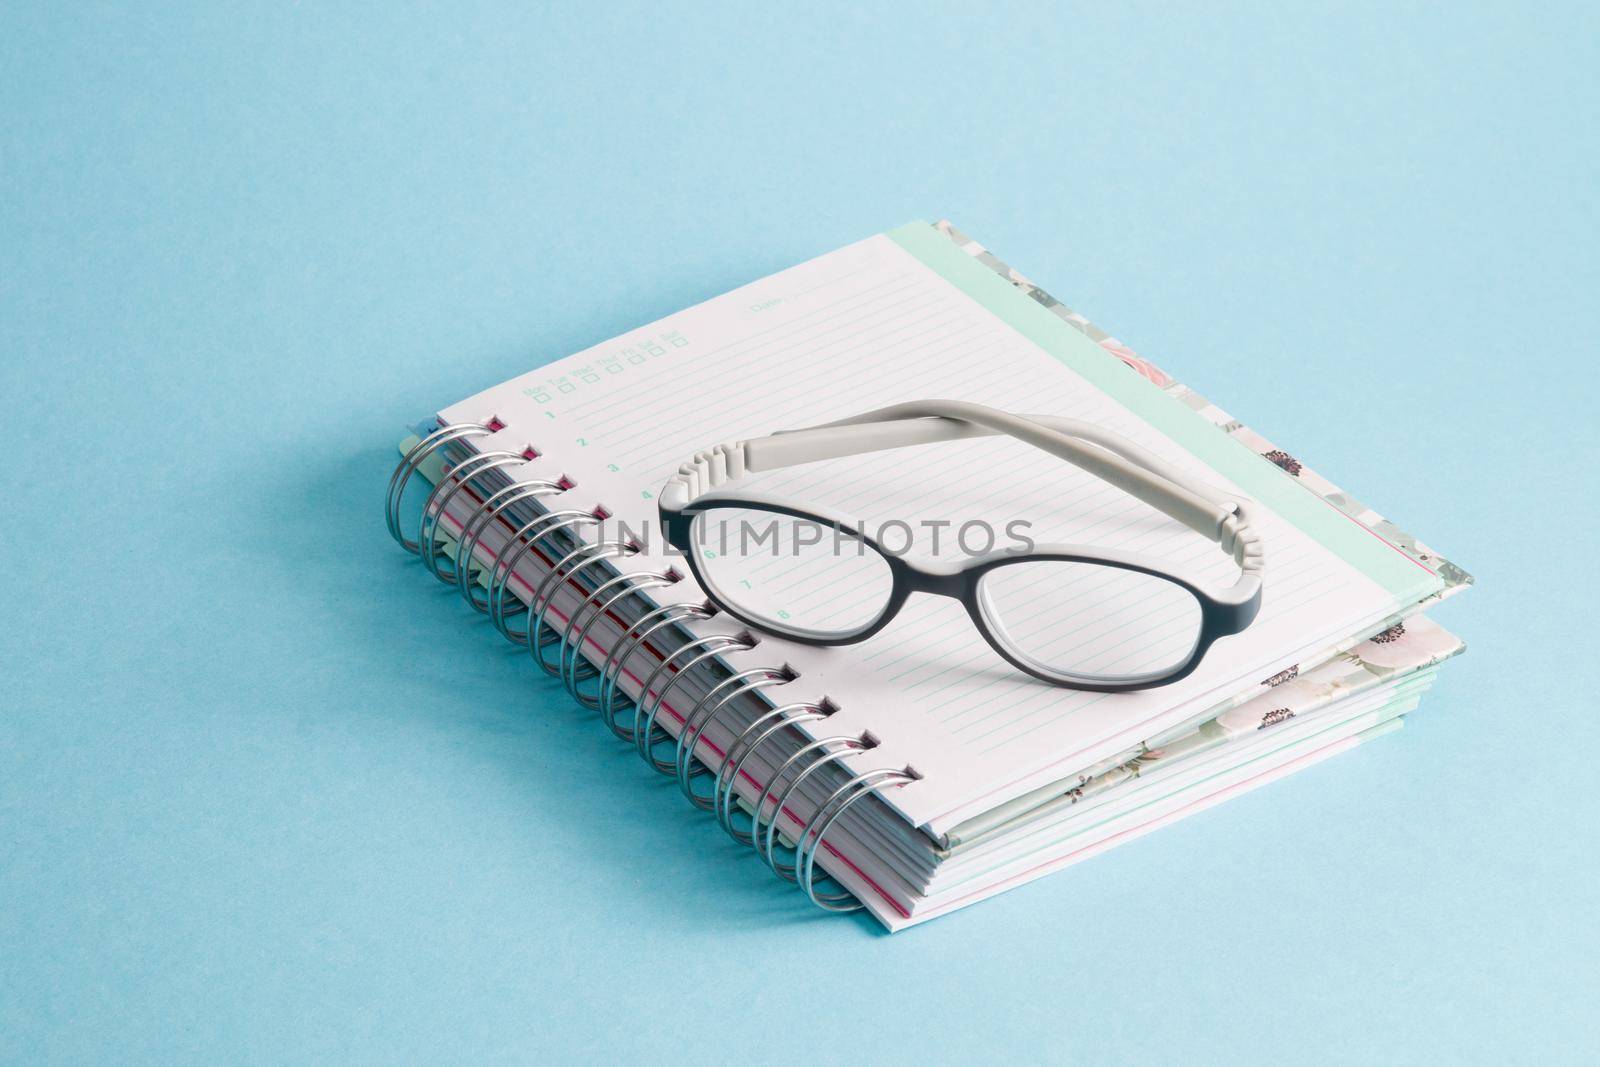 children's glasses lie on a notebook, blue background, copy space, gray bending anti-vandal glasses frame